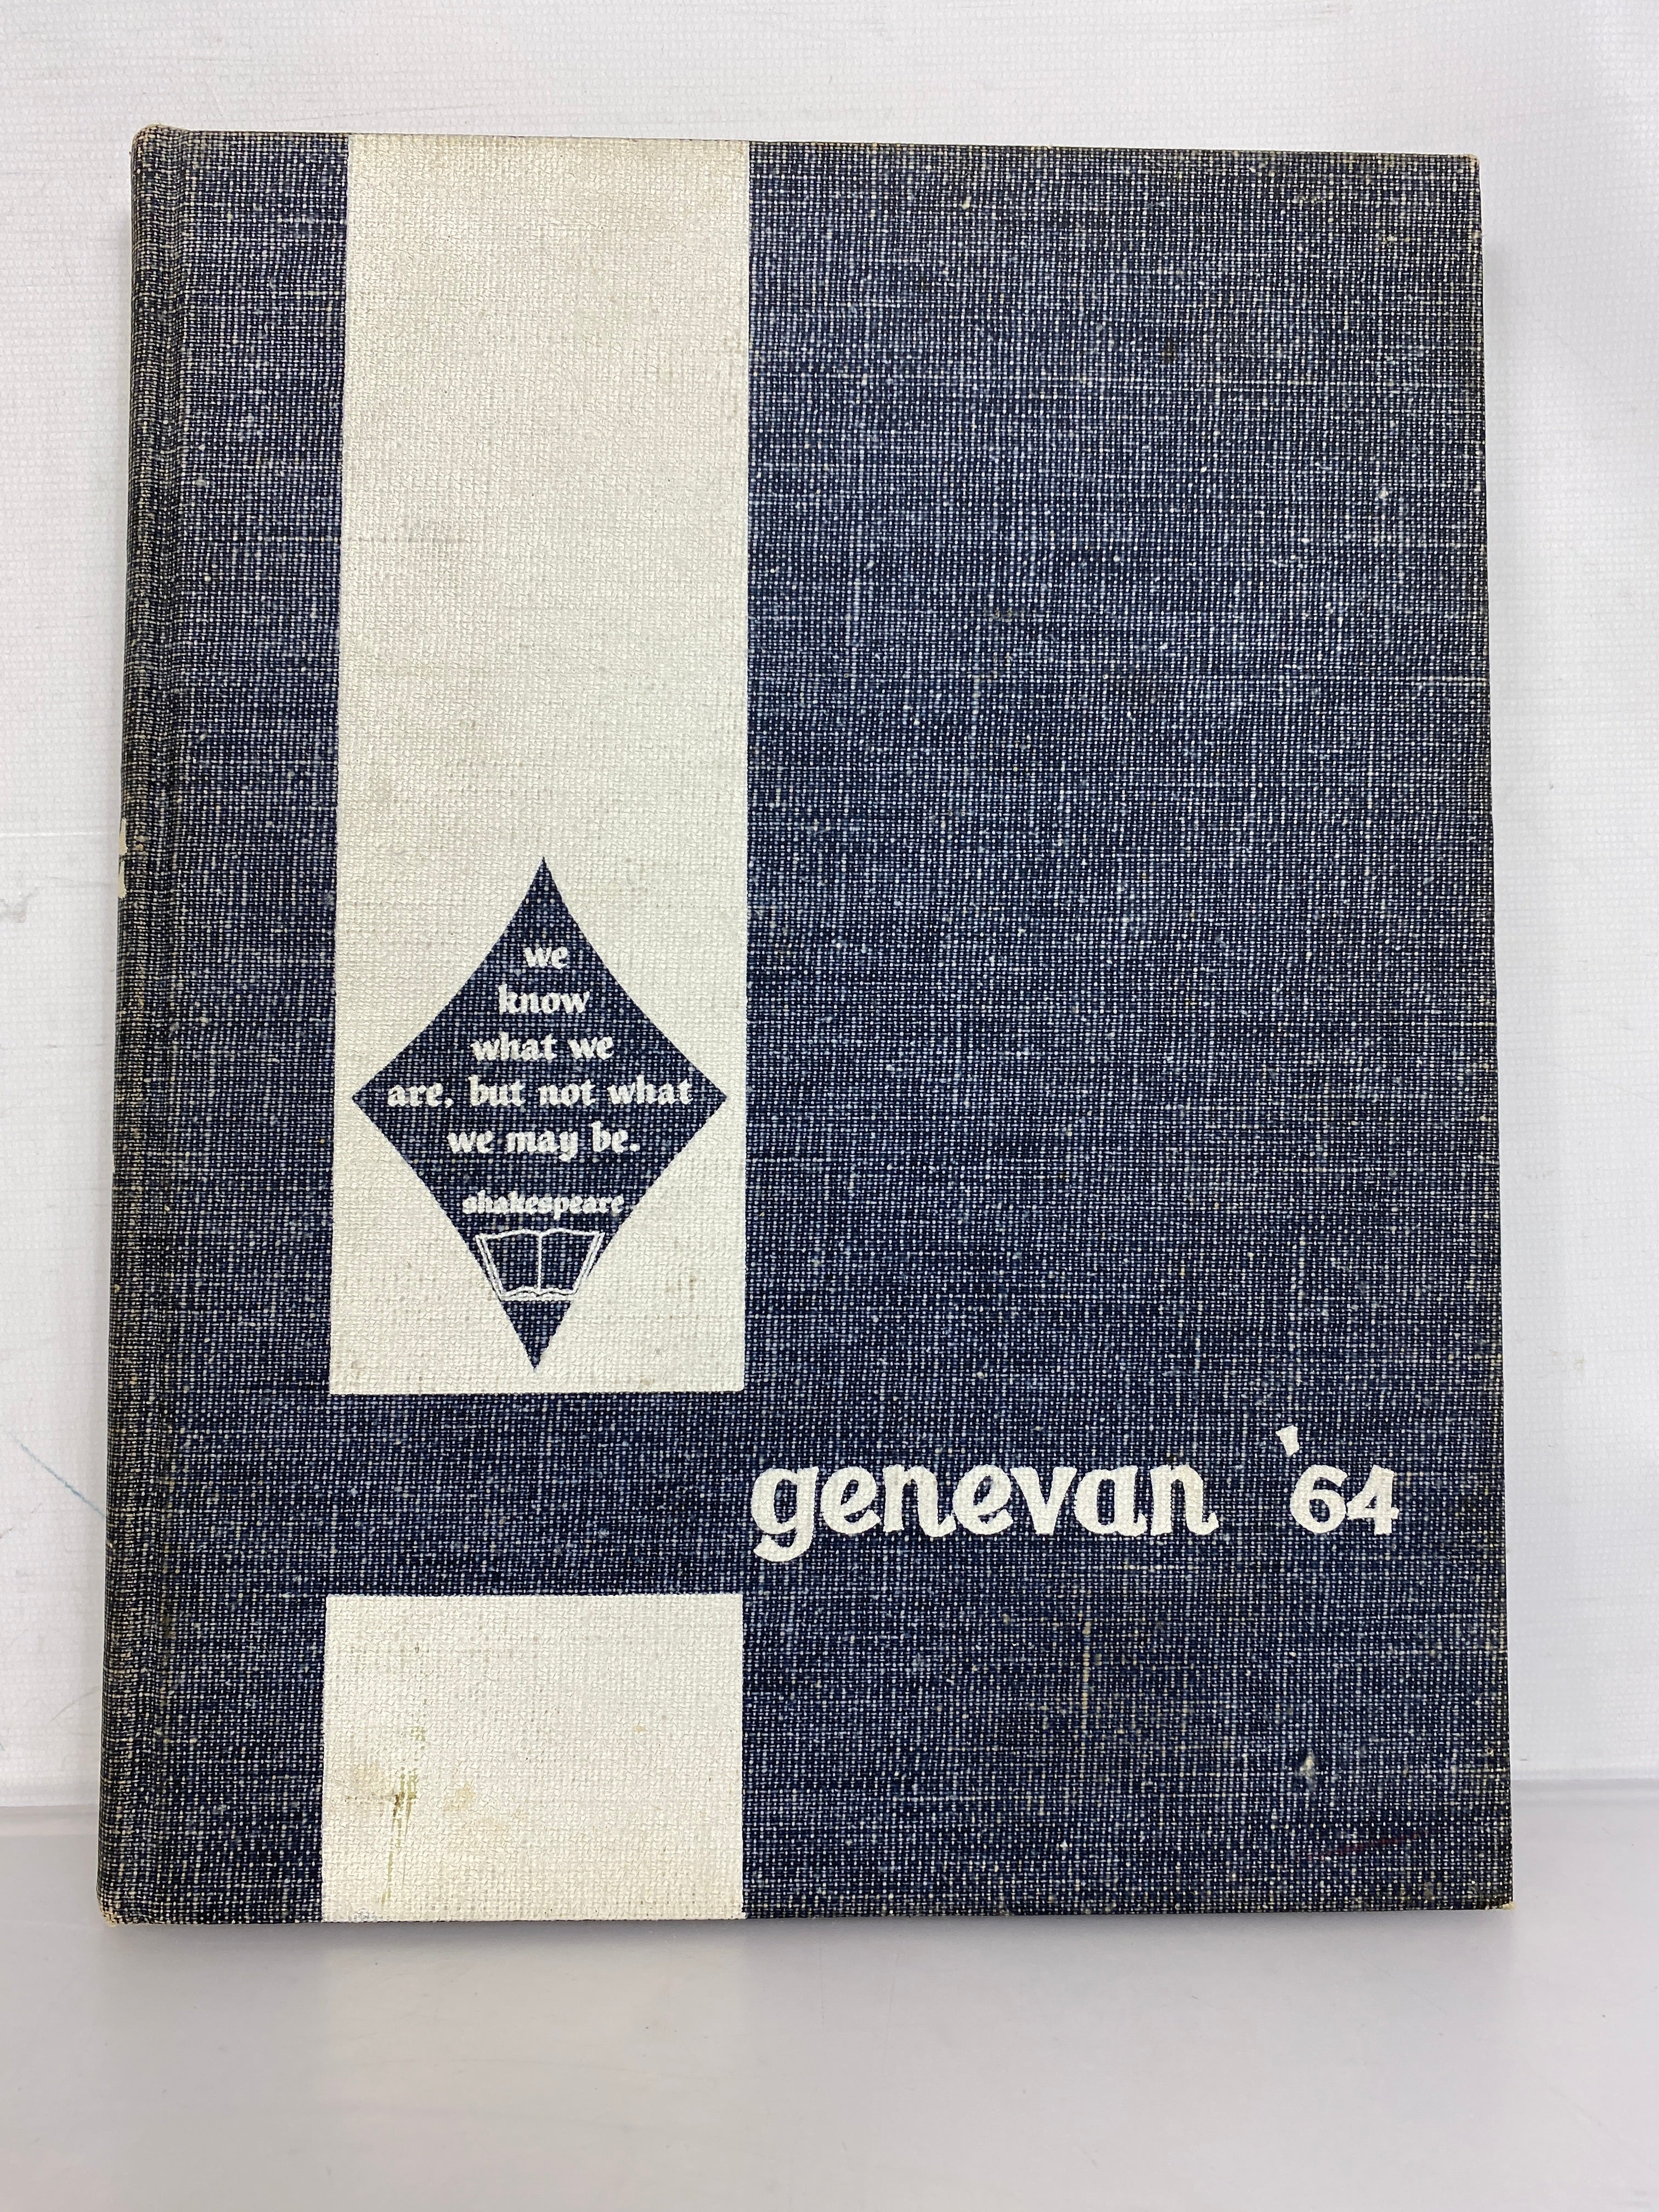 1964 Geneva College Yearbook "The Genevan" Beaver Falls Pennsylvania